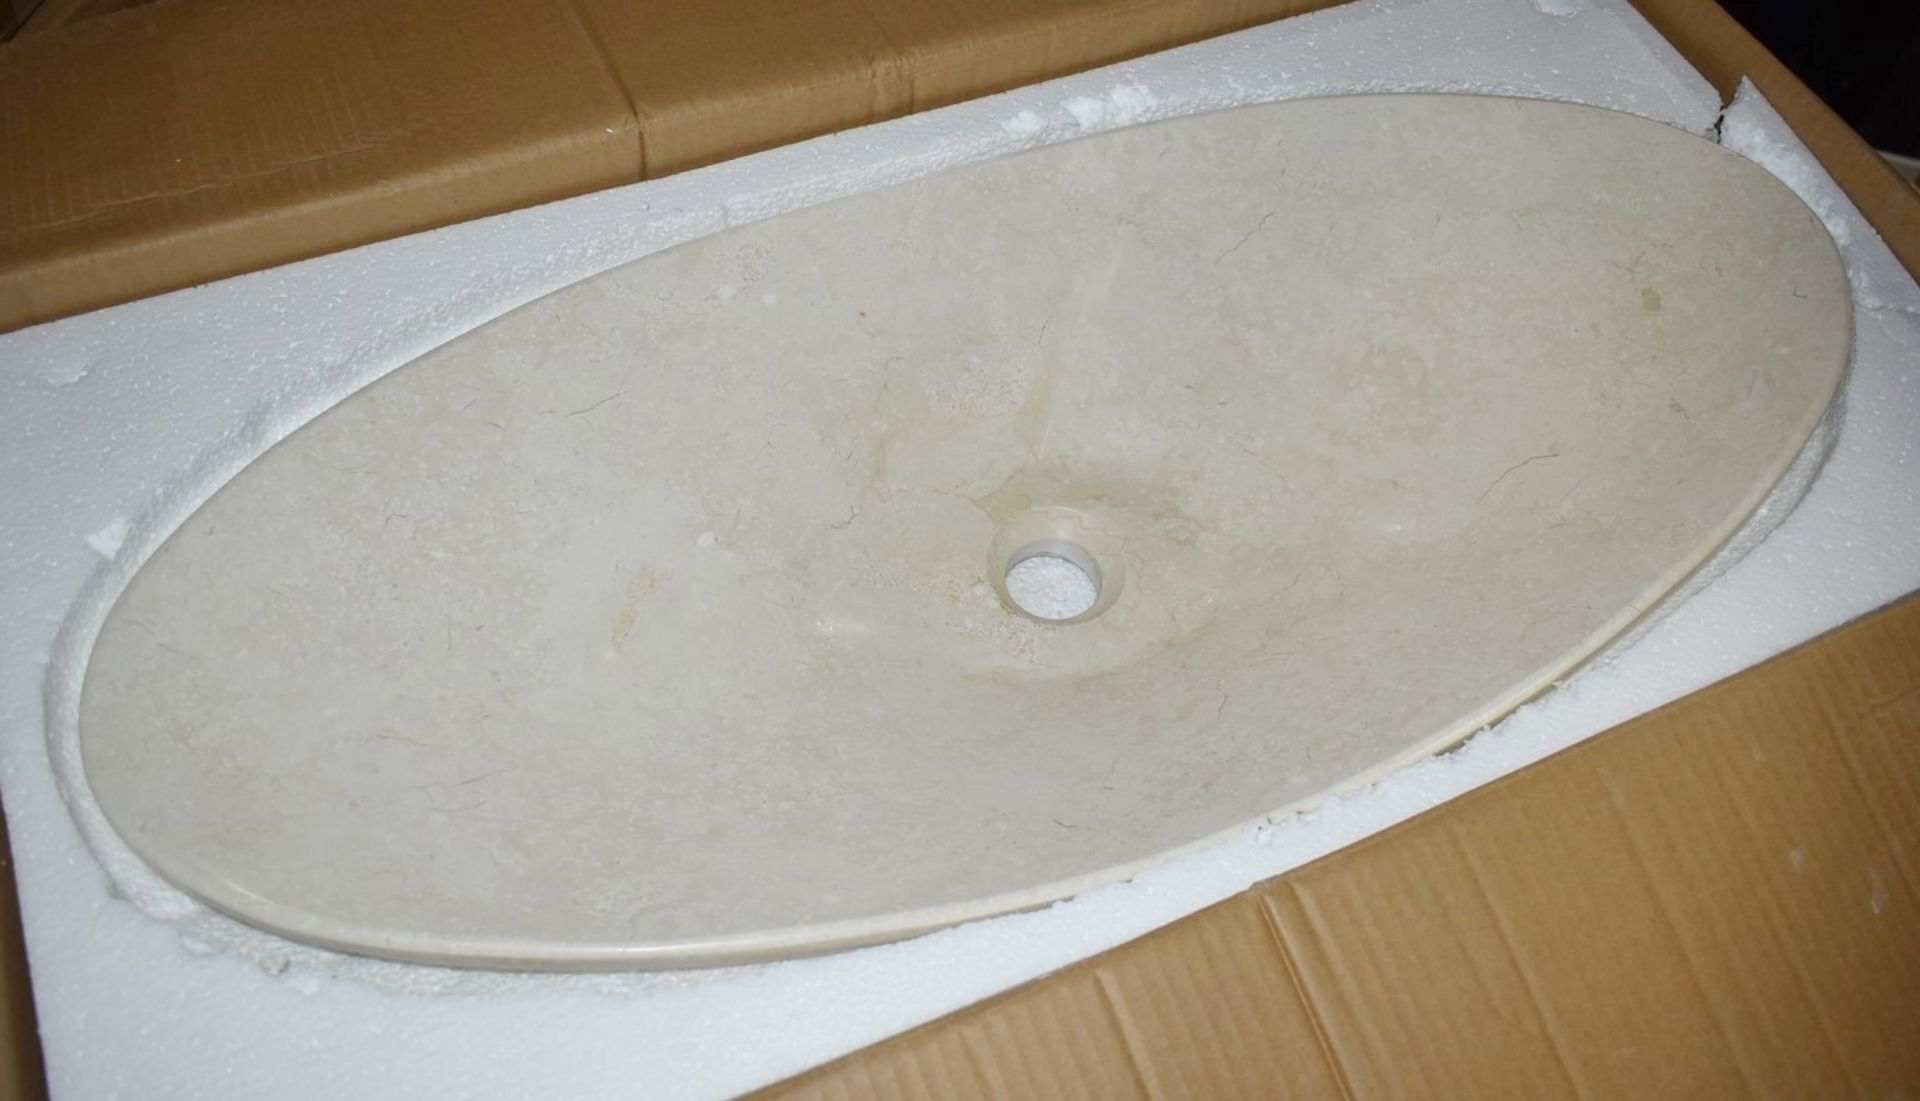 1 x Stonearth 'Cyra' Black Galala Marble Stone Countertop Sink Basin - New Boxed Stock - RRP £ - Image 5 of 7